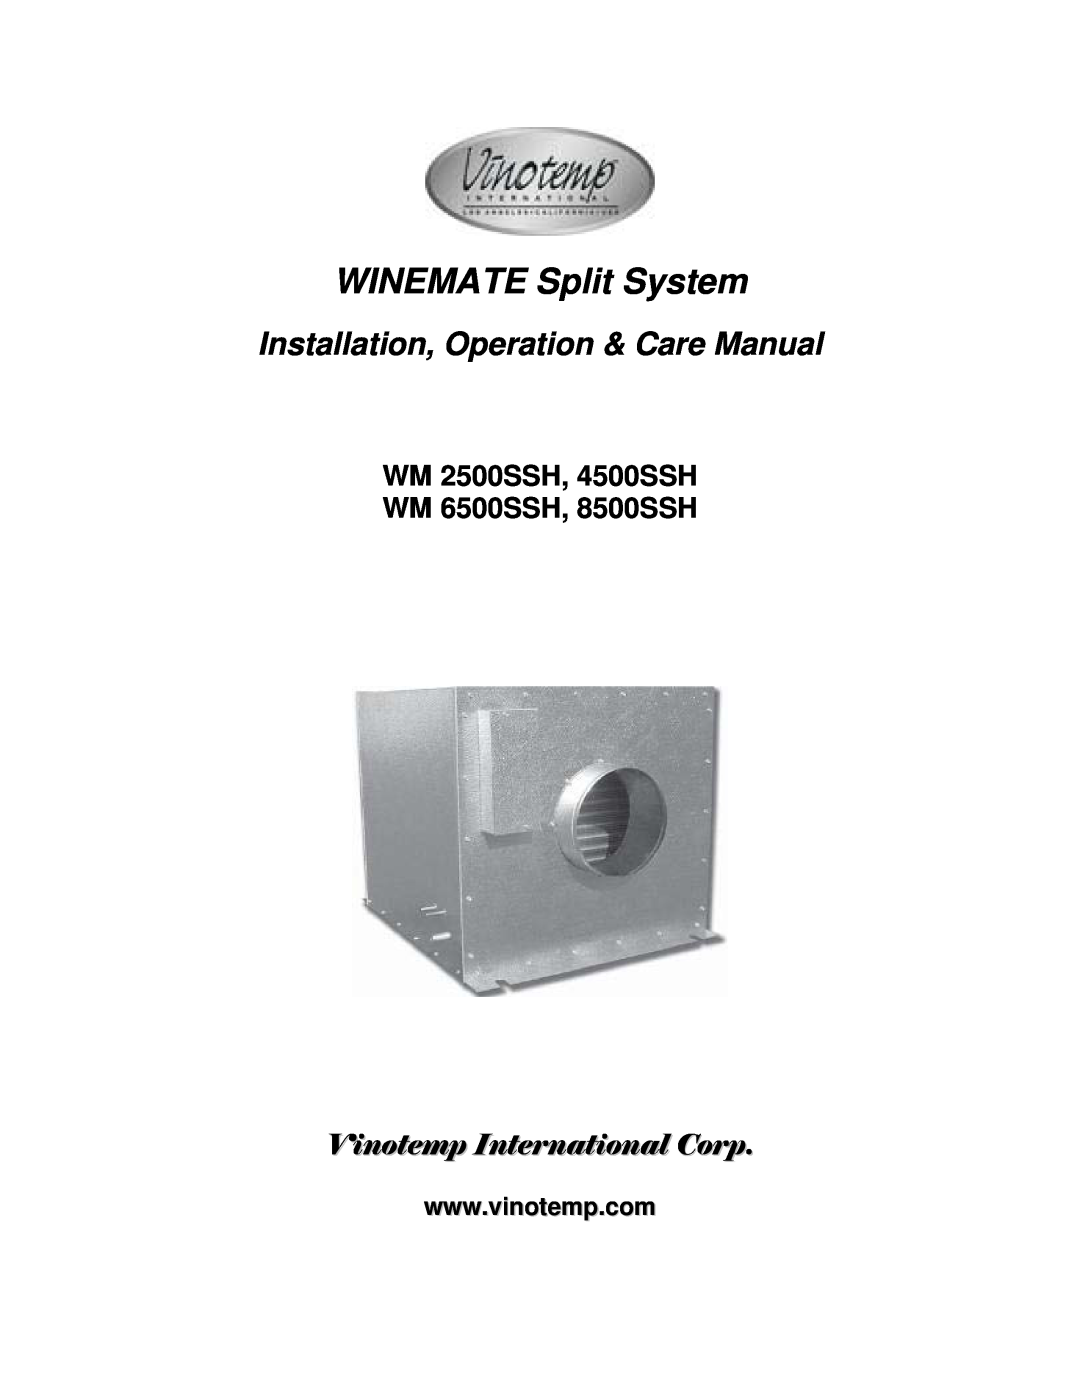 Vinotemp manual WM 2500SSH, 4500SSH WM 6500SSH, 8500SSH, WINEMATE Split System, Installation, Operation & Care Manual 